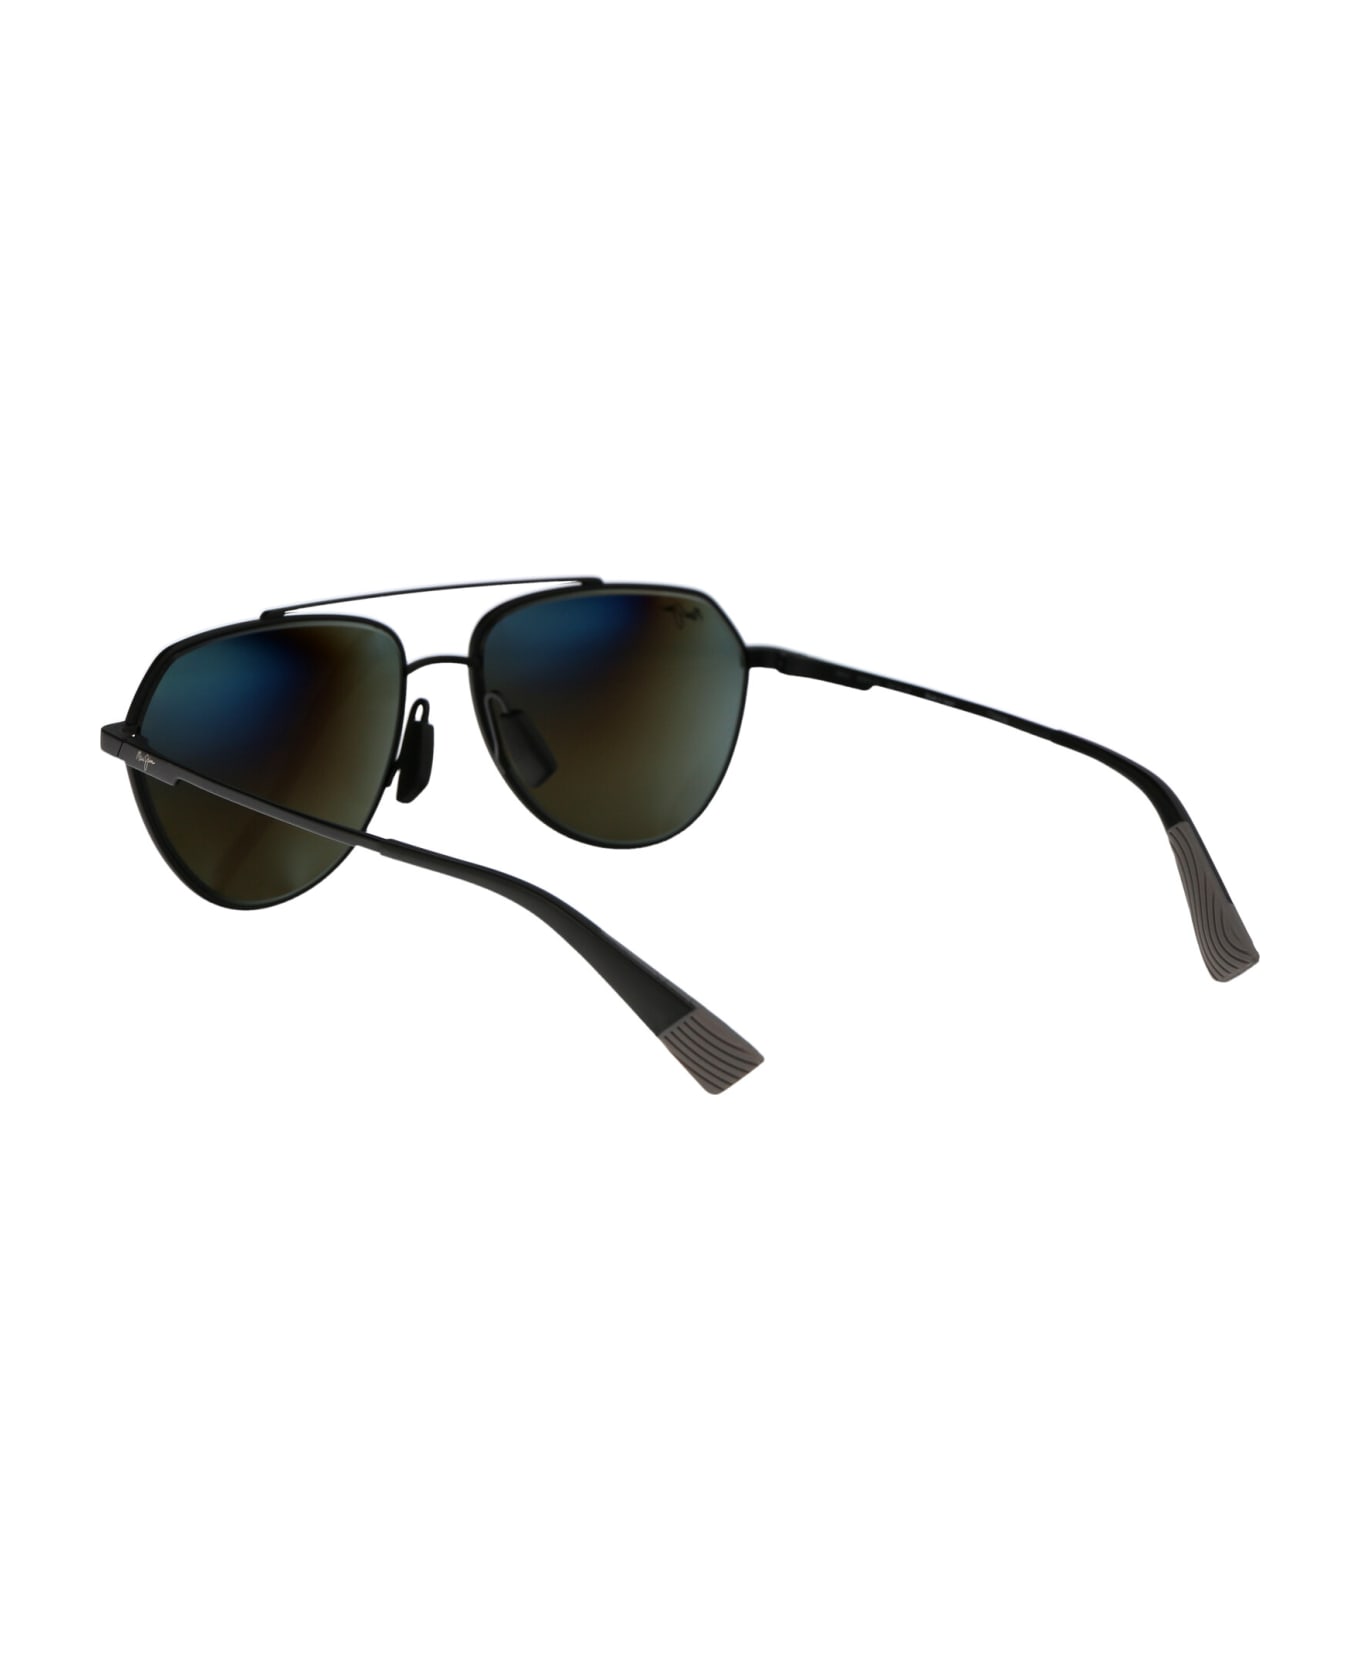 Maui Jim Waiwai Sunglasses - 02 GREY WAIWAI MATTE BLACK W/ GREY